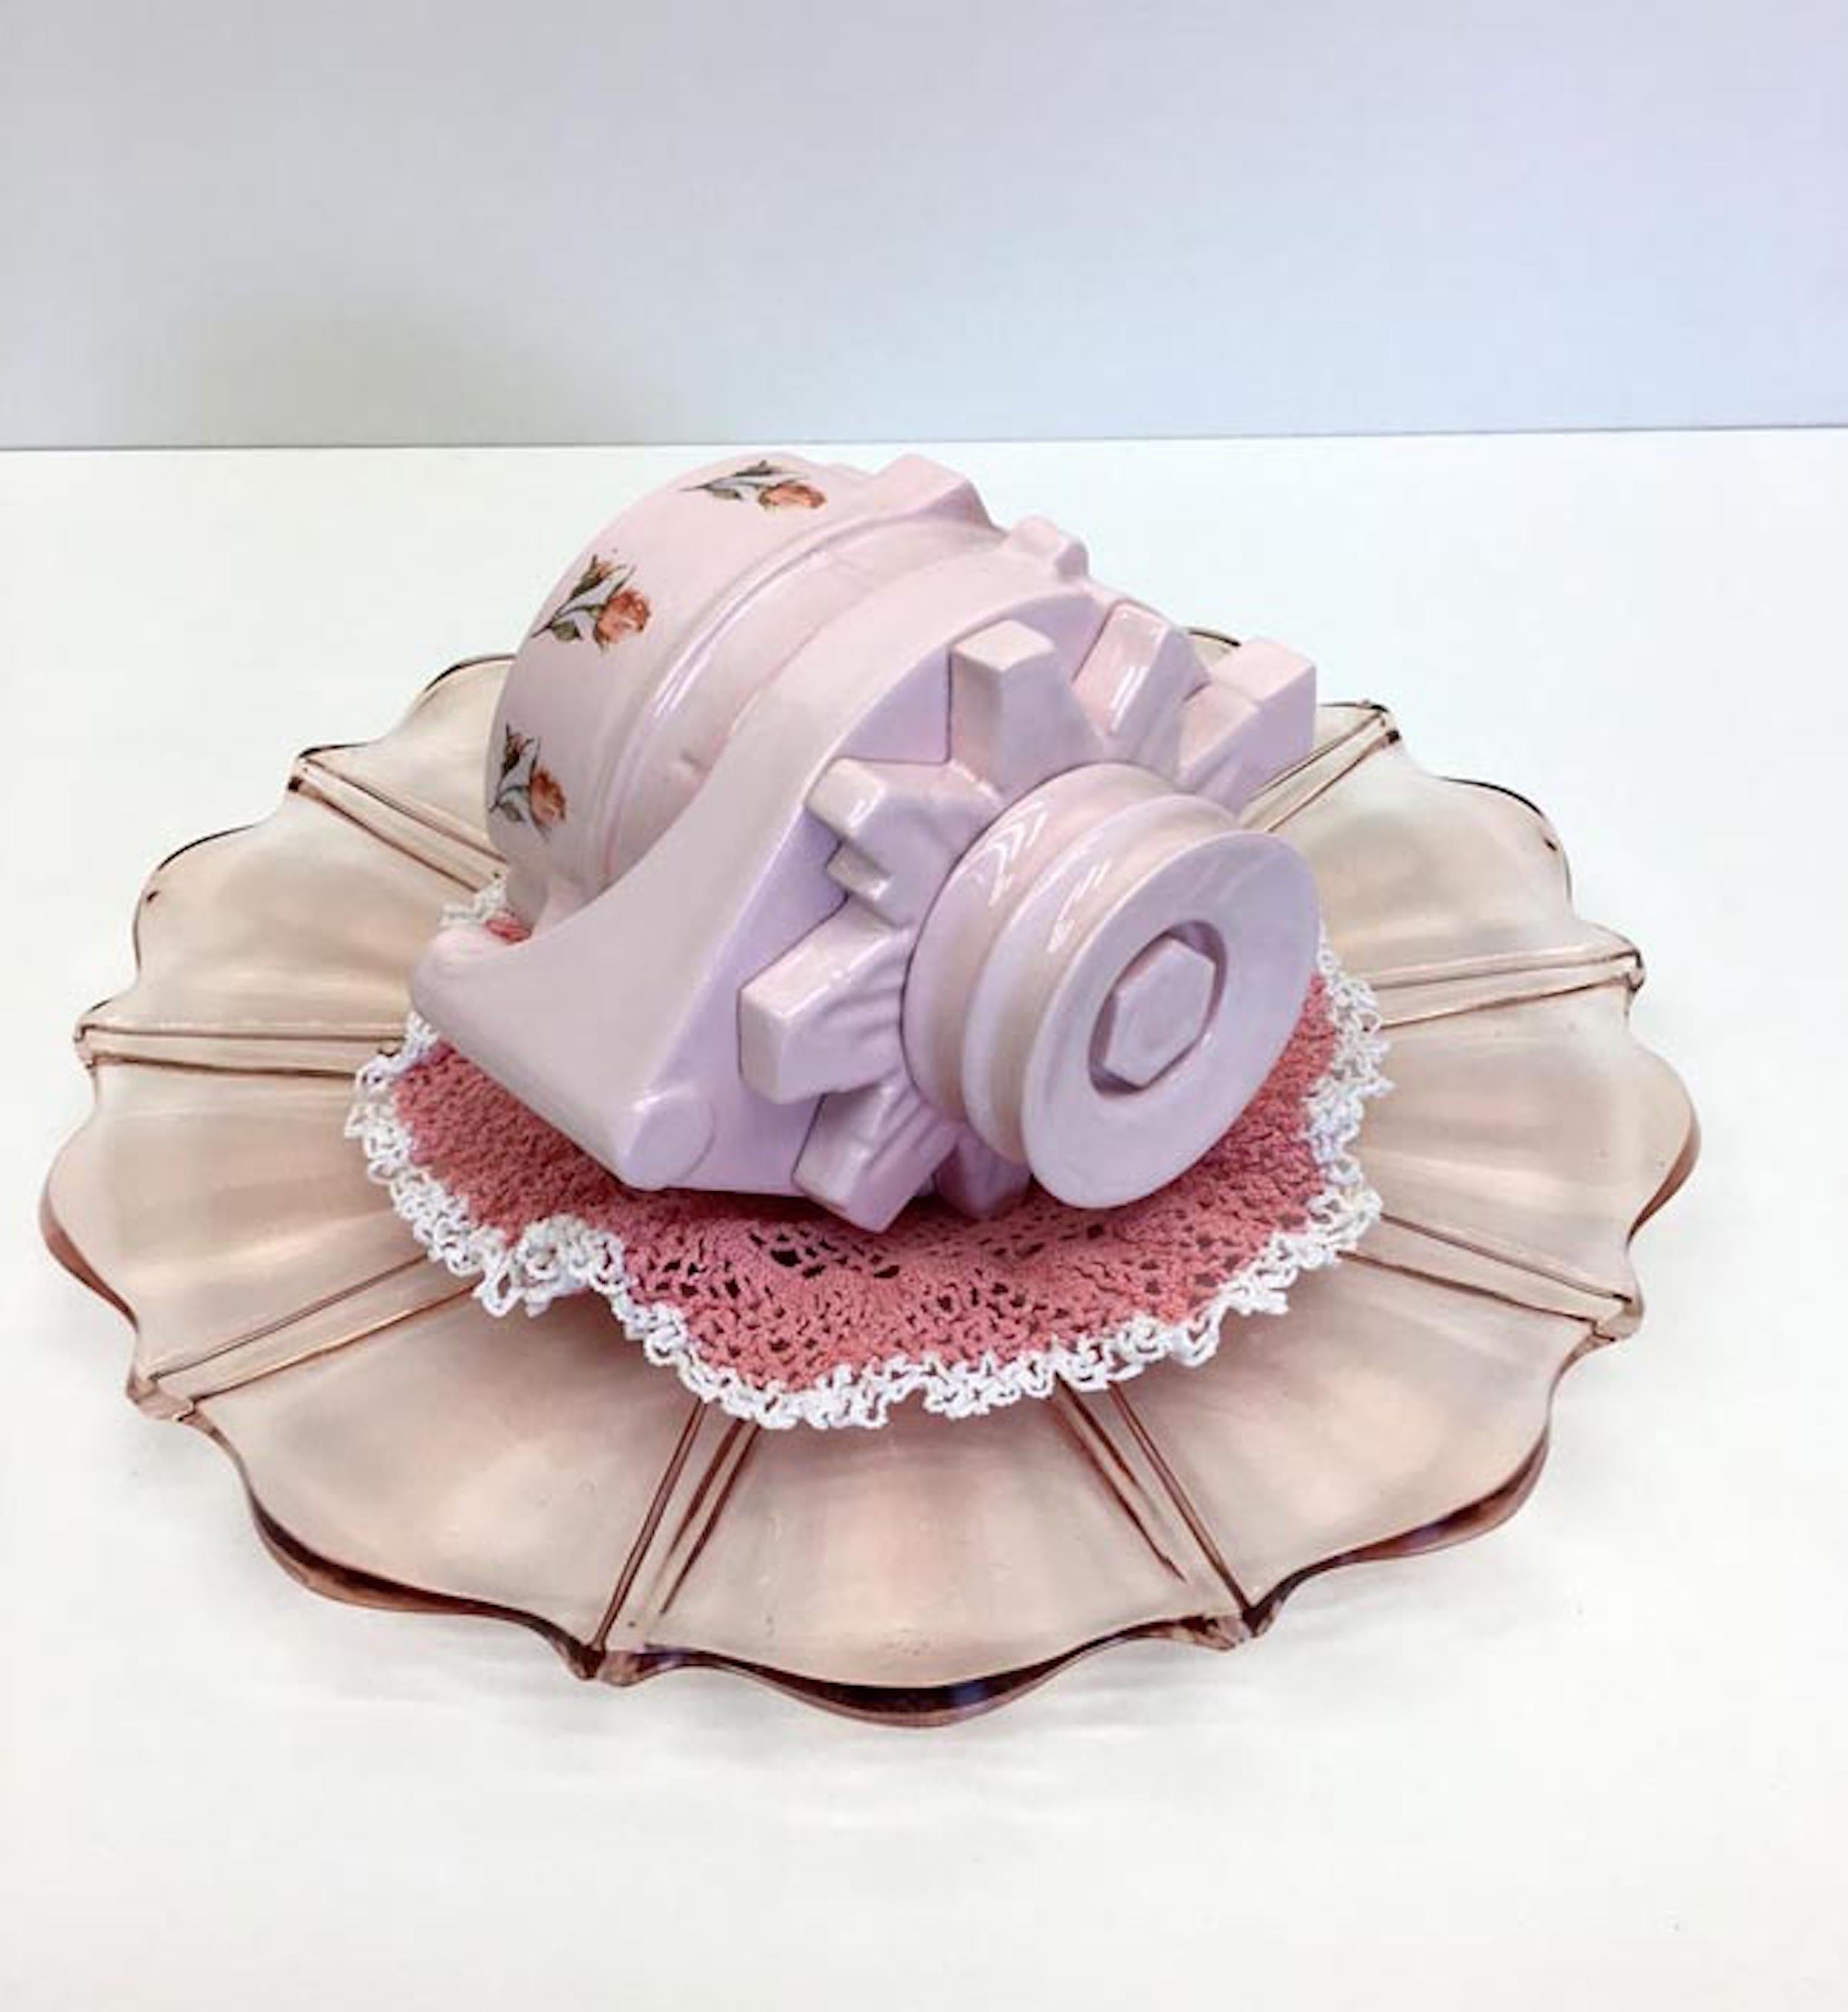 Clint Neufeld Abstract Sculpture - Pink Alt, Contemporary, Abstract, Ceramic Sculpture